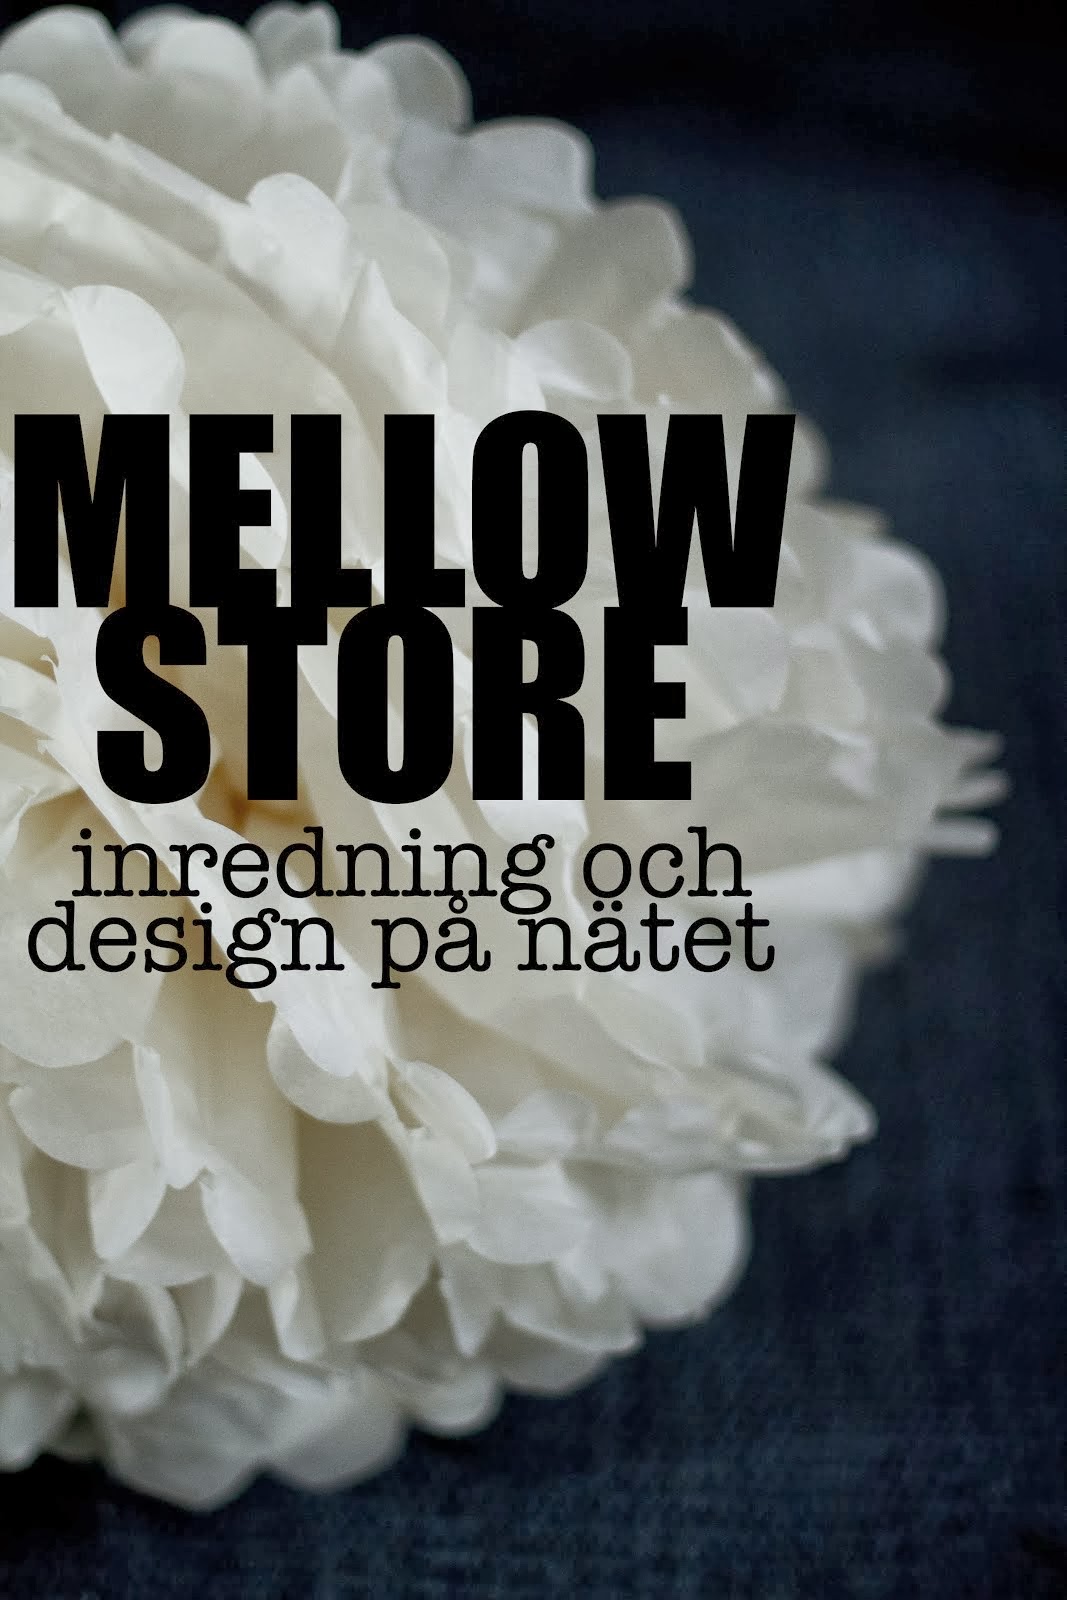 Mellow store